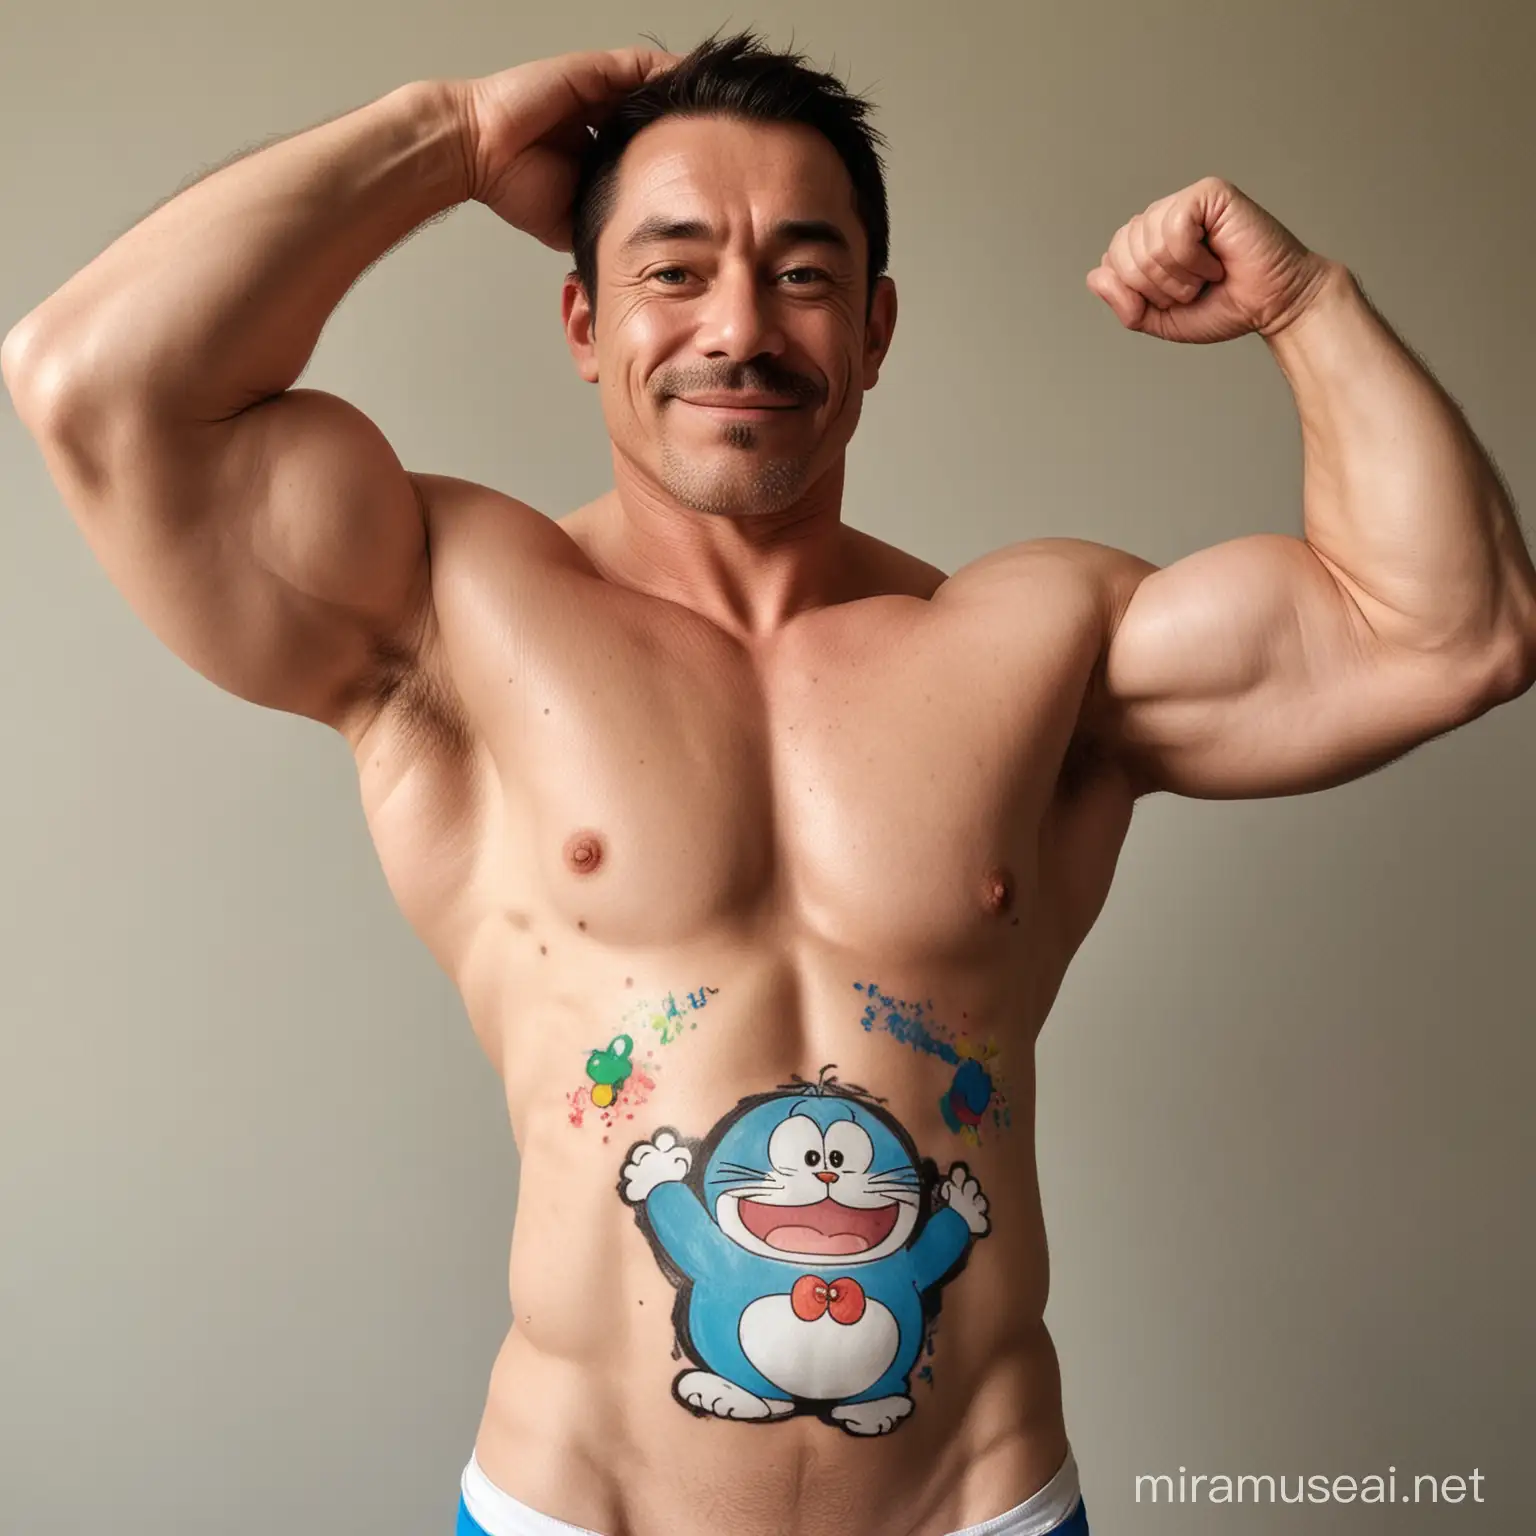 Buff 40s Bodybuilder Daddy Flexing with Doraemon Body Art